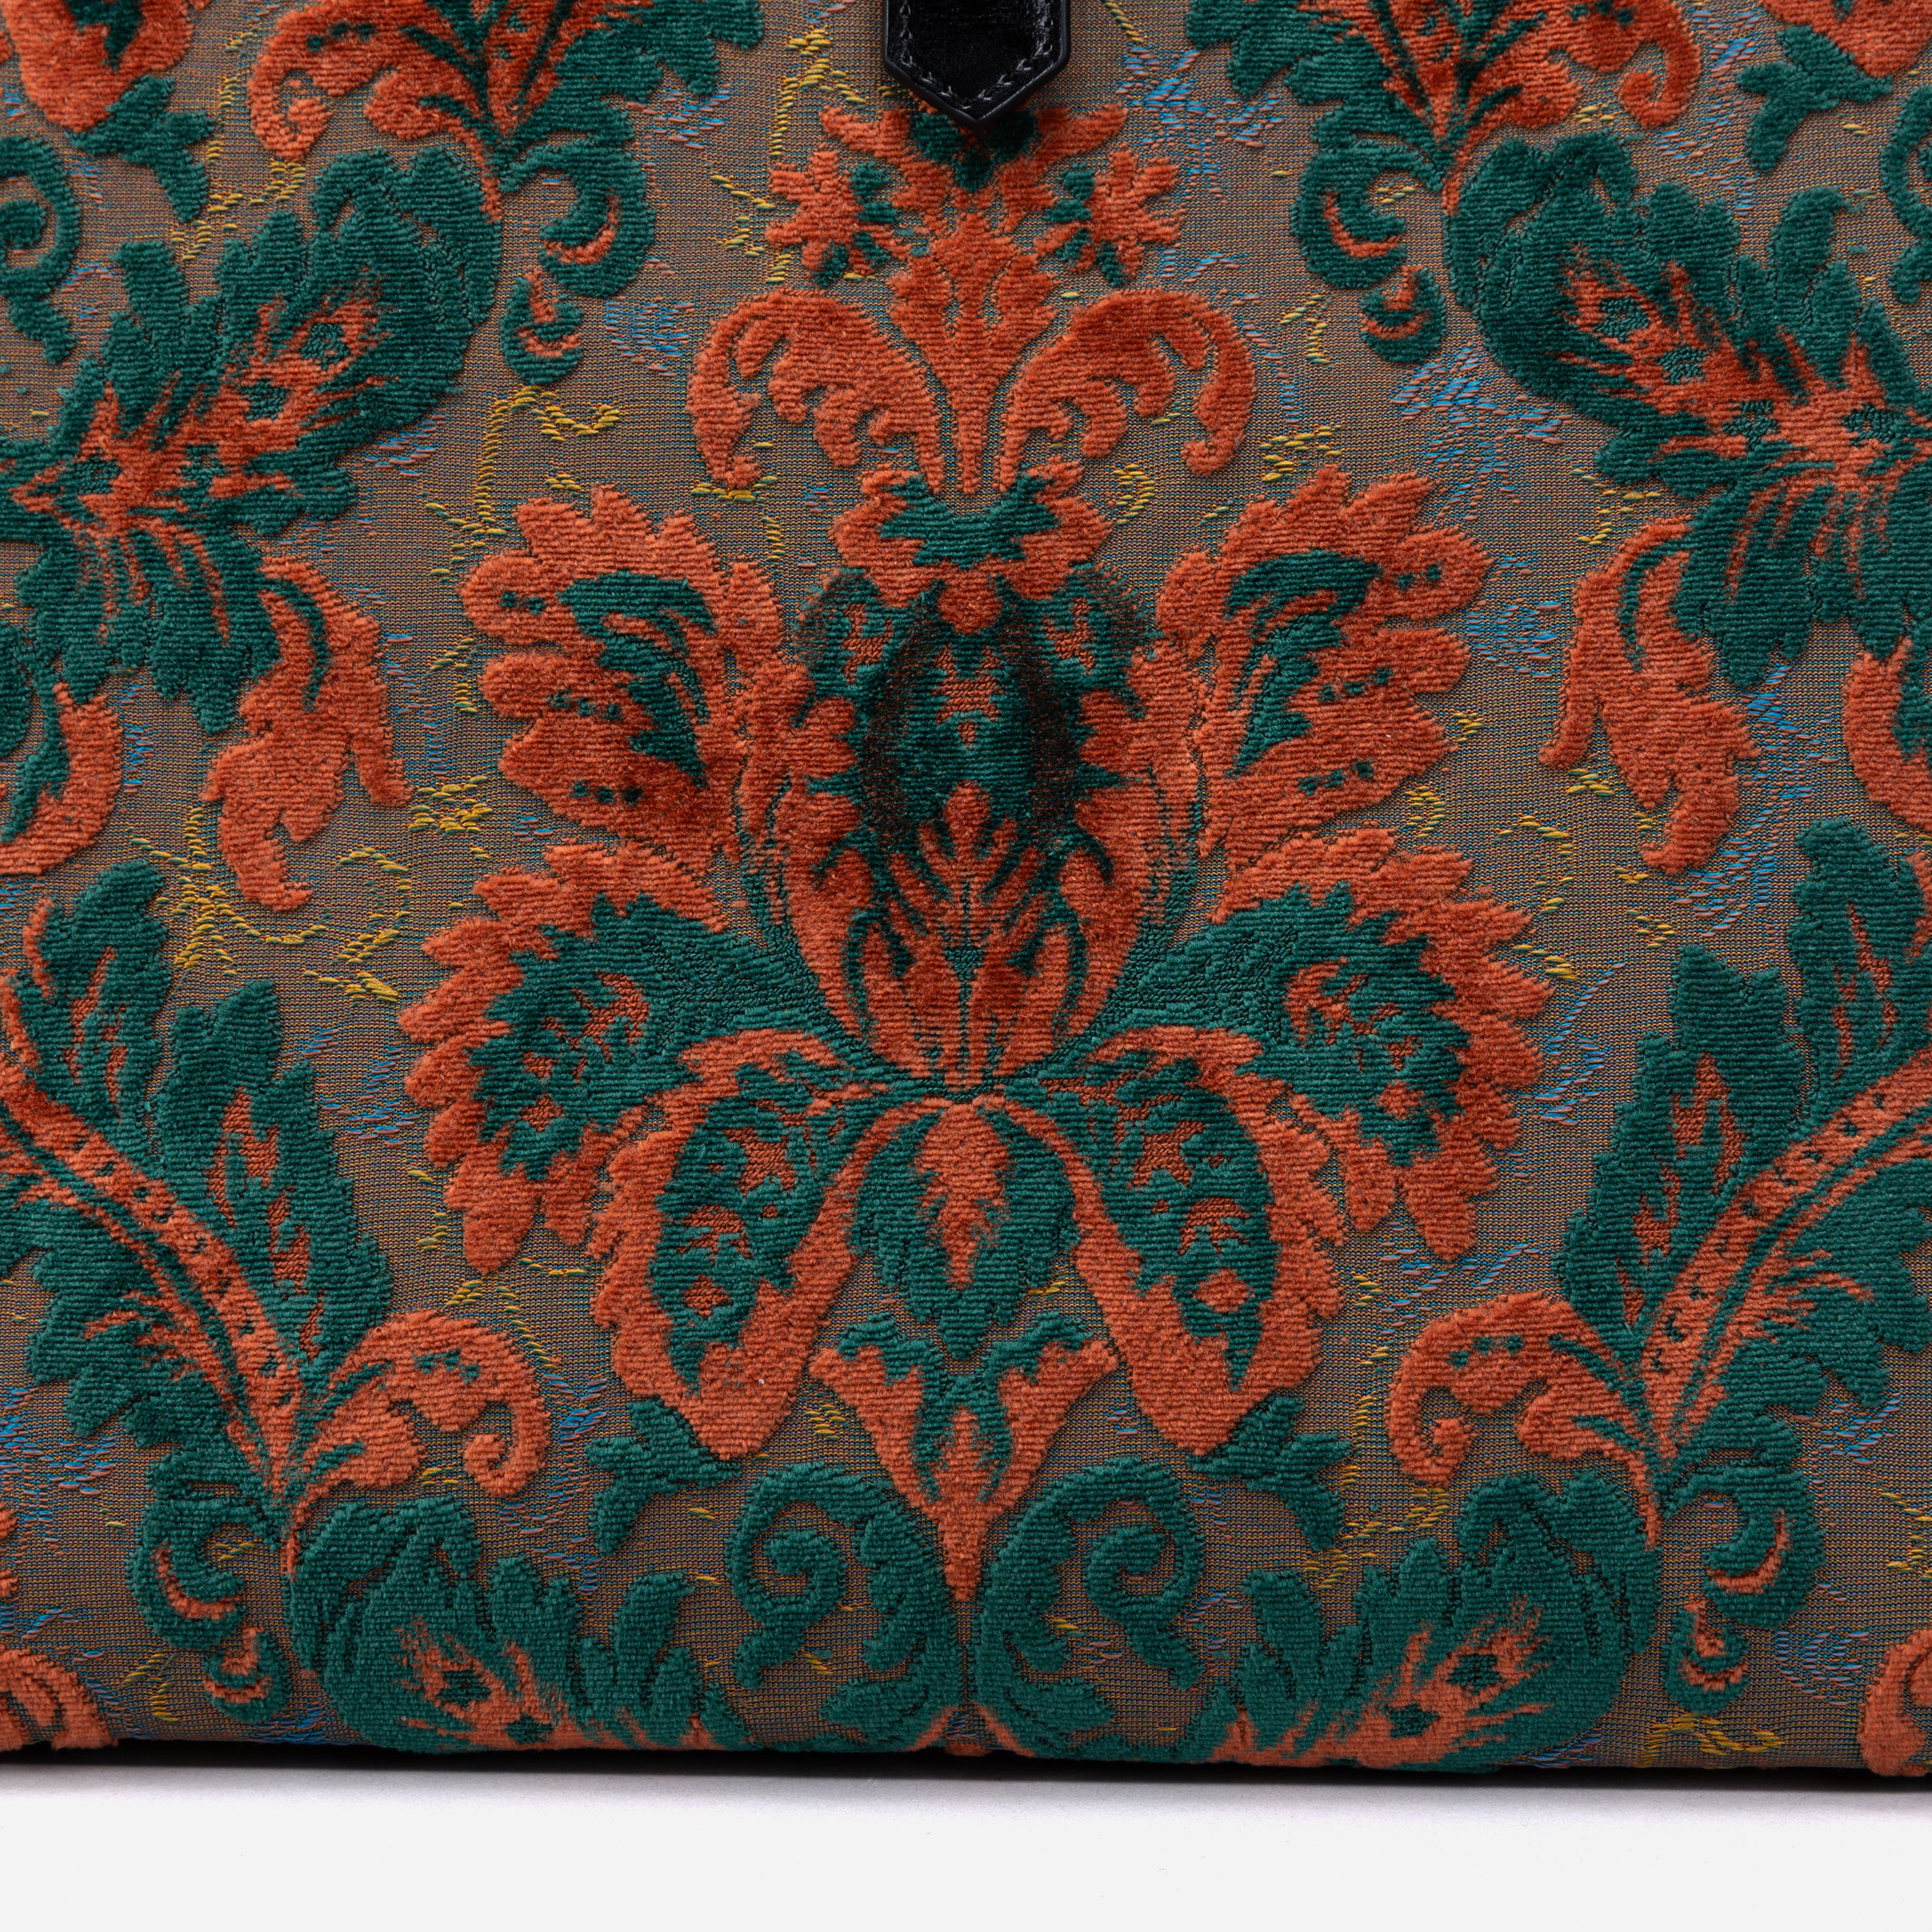 Mary Poppins Carpetbag Revival Jade weekender pattern